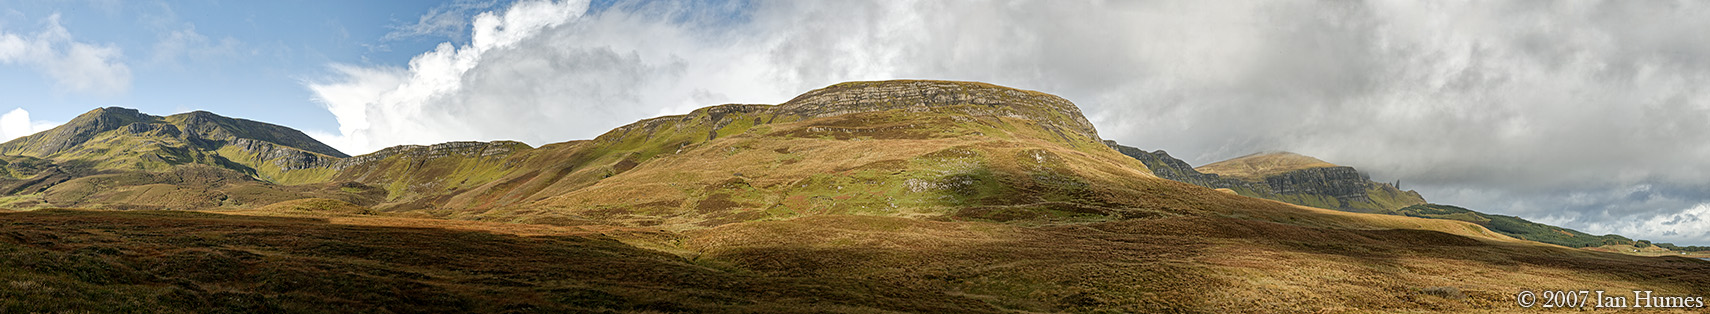 Trotternish Ridge and Old man of Storr - Isle of Skye